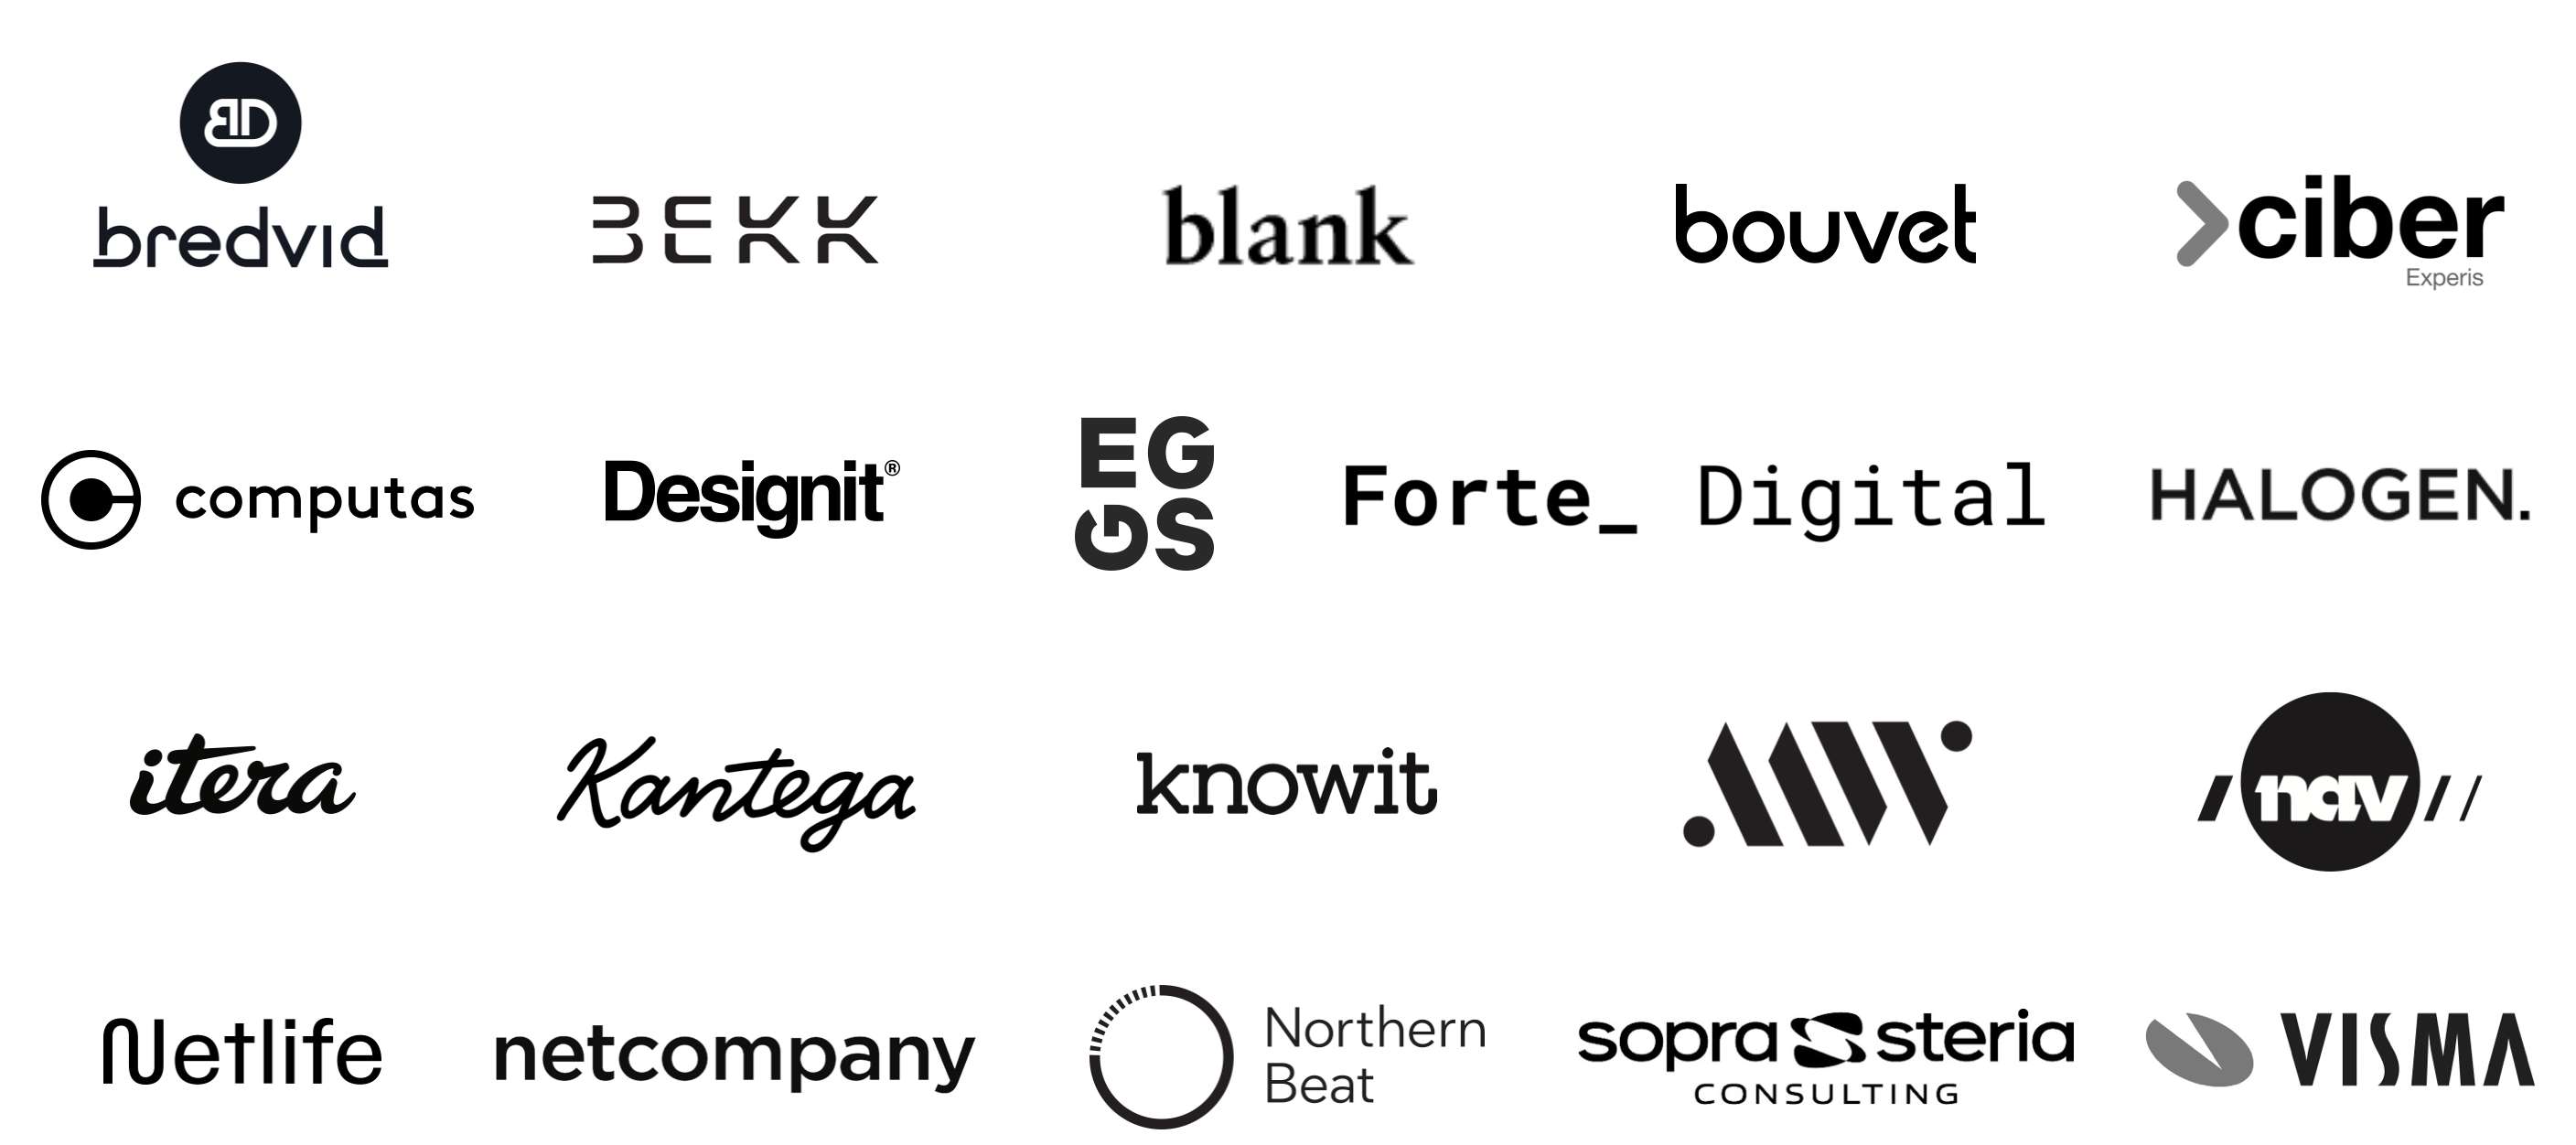 Image shows the logos of IxDA Oslo's 20 sponsors